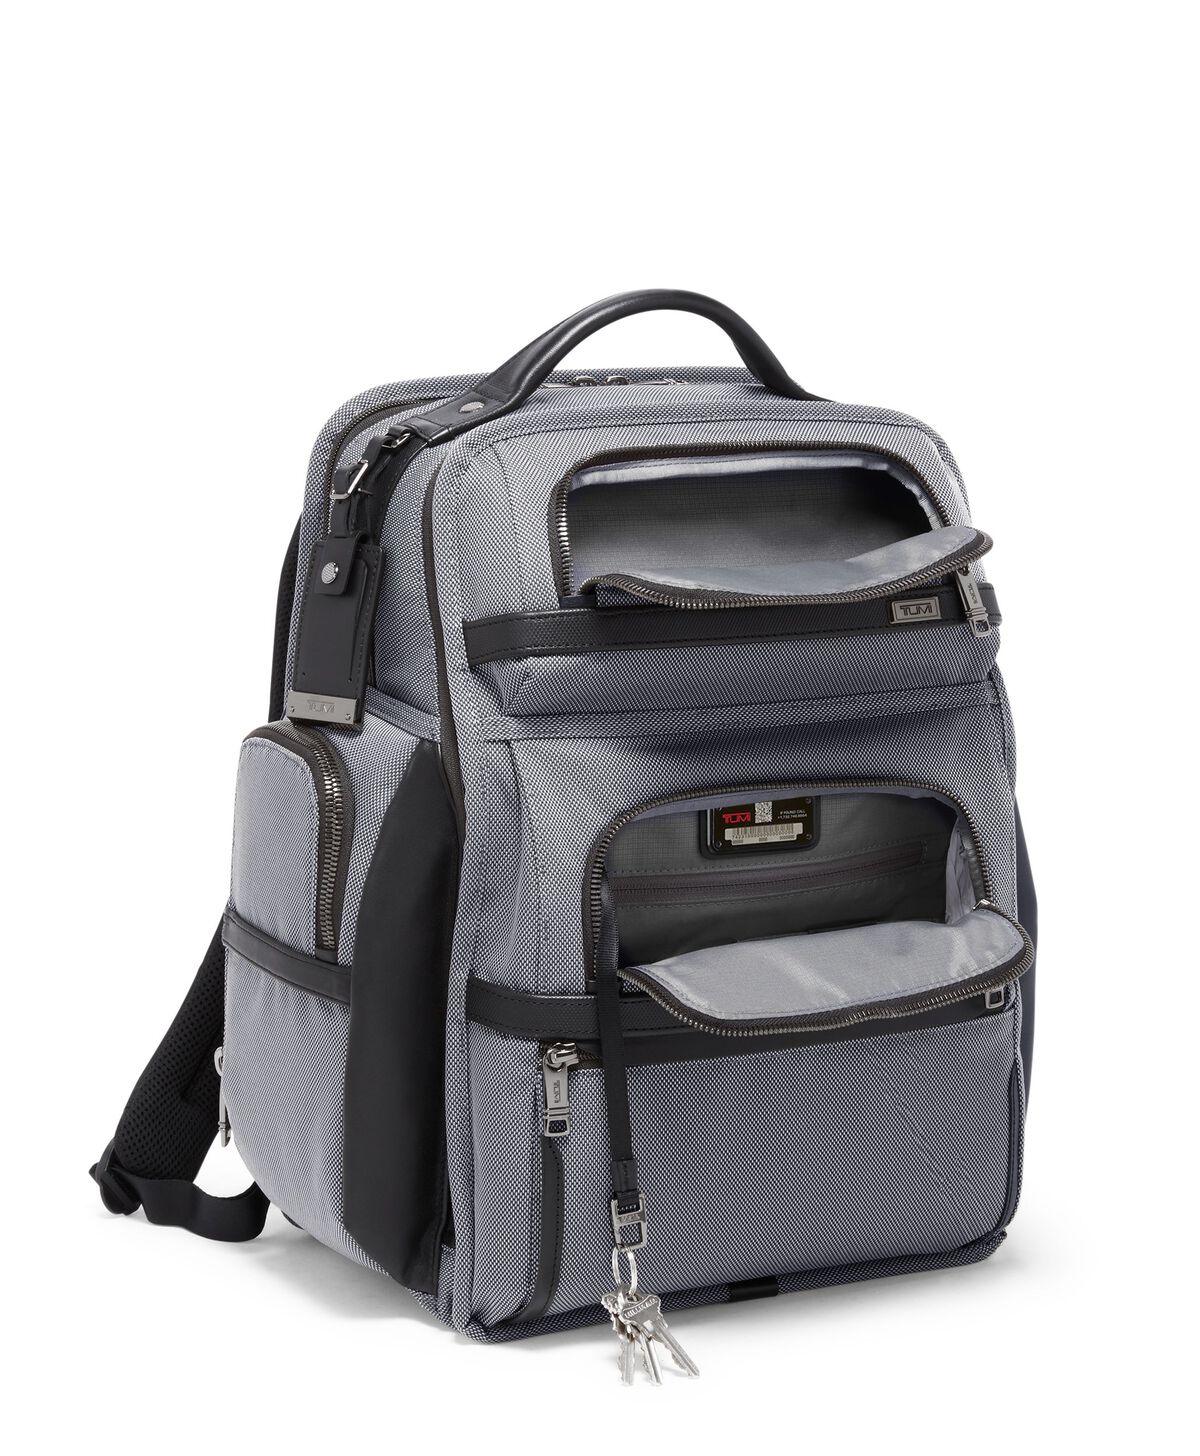 TUMI Alpha 3 Packing Backpack Black